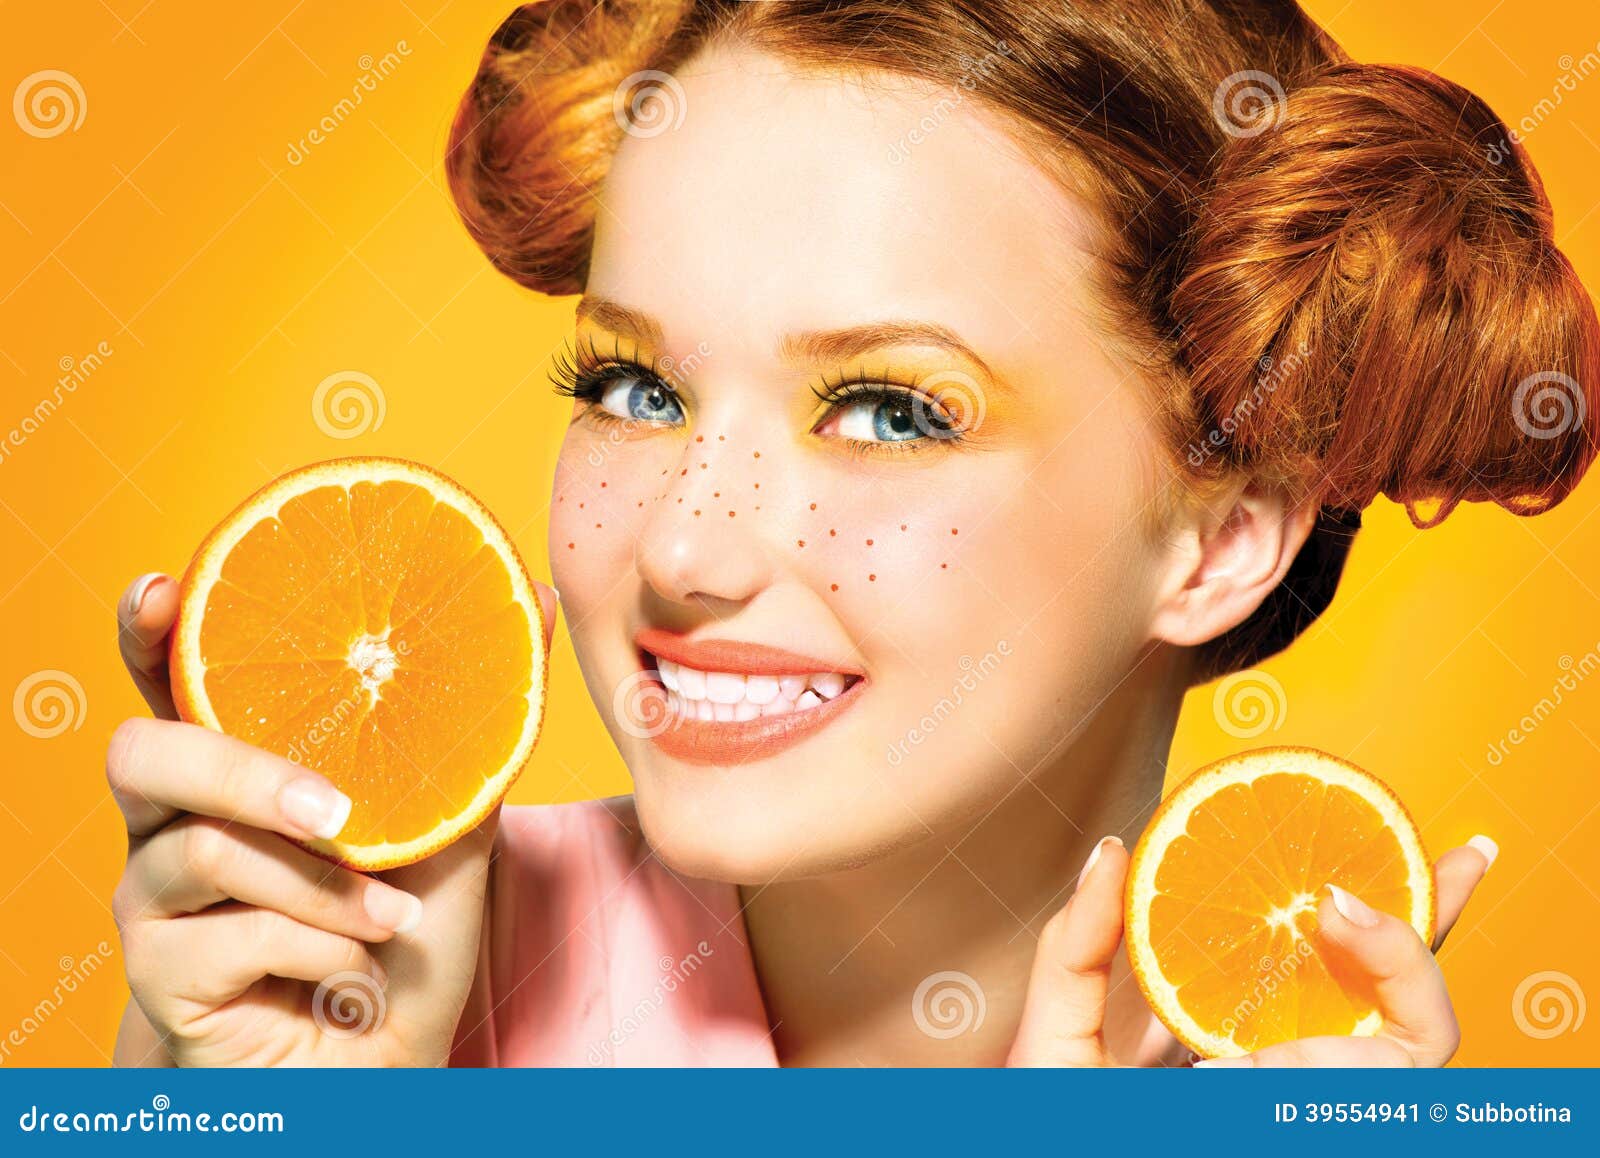 beauty joyful teen girl with juicy oranges